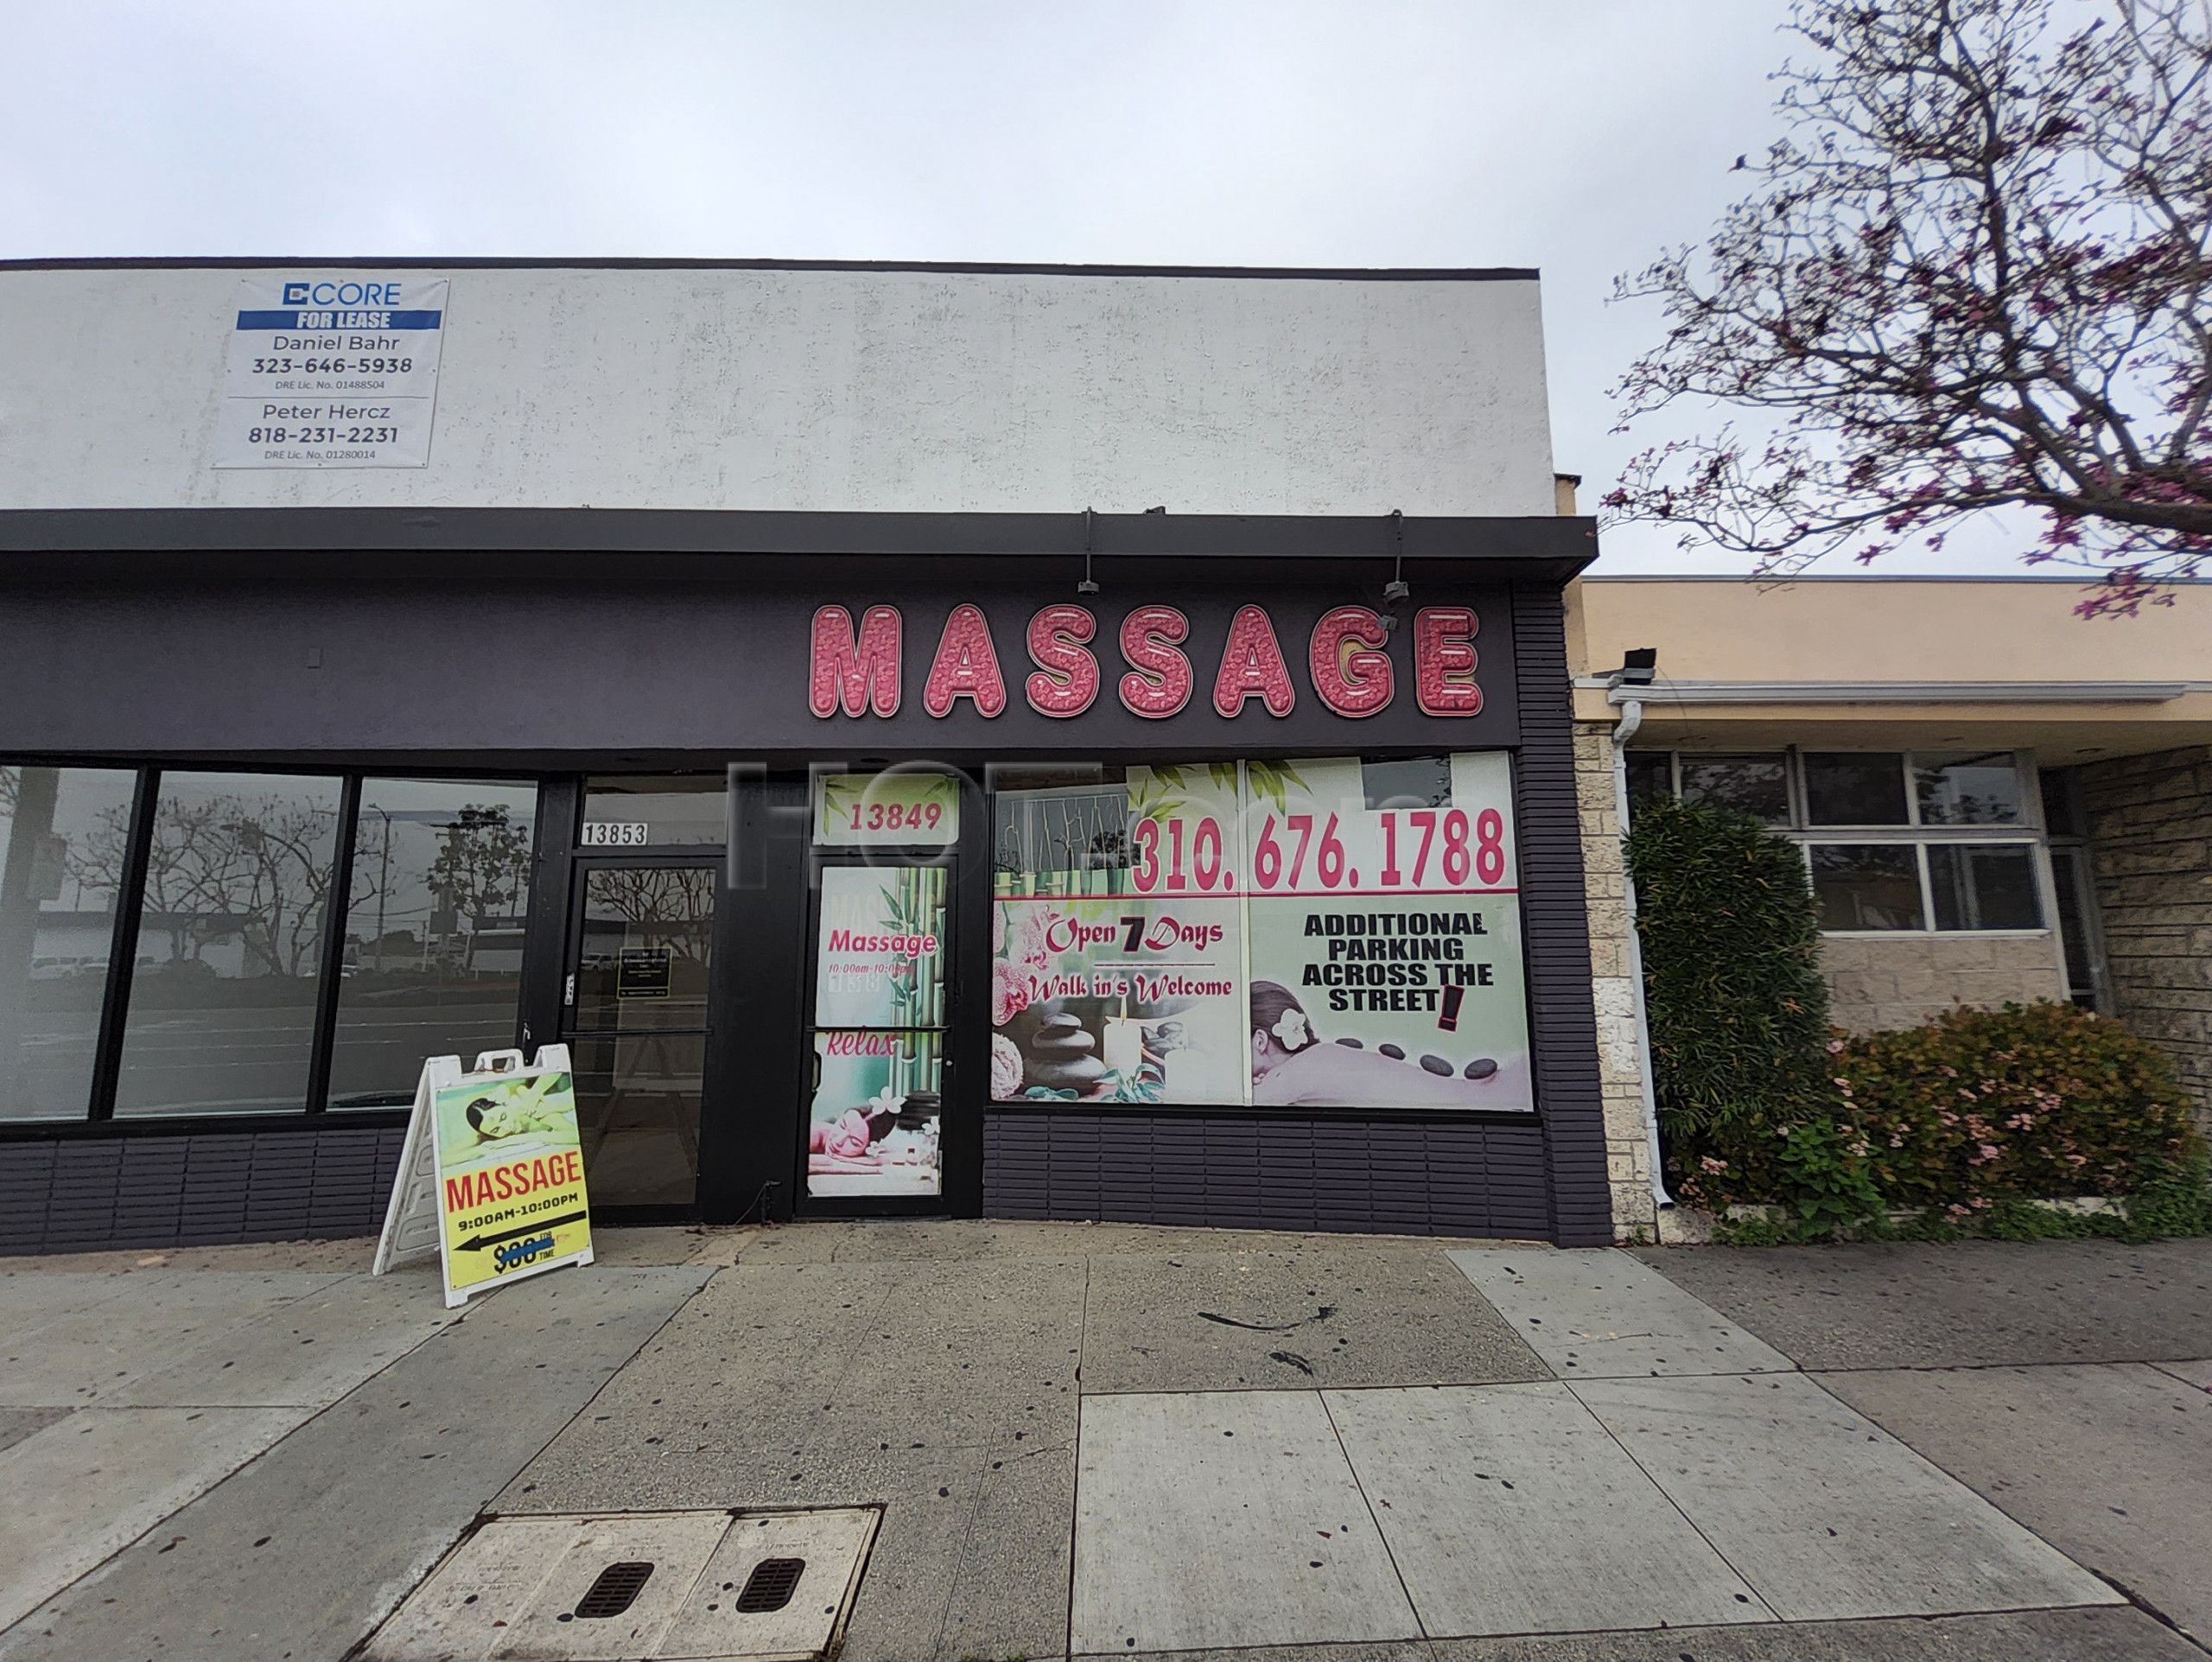 Hawthorne, California South Coast Massage